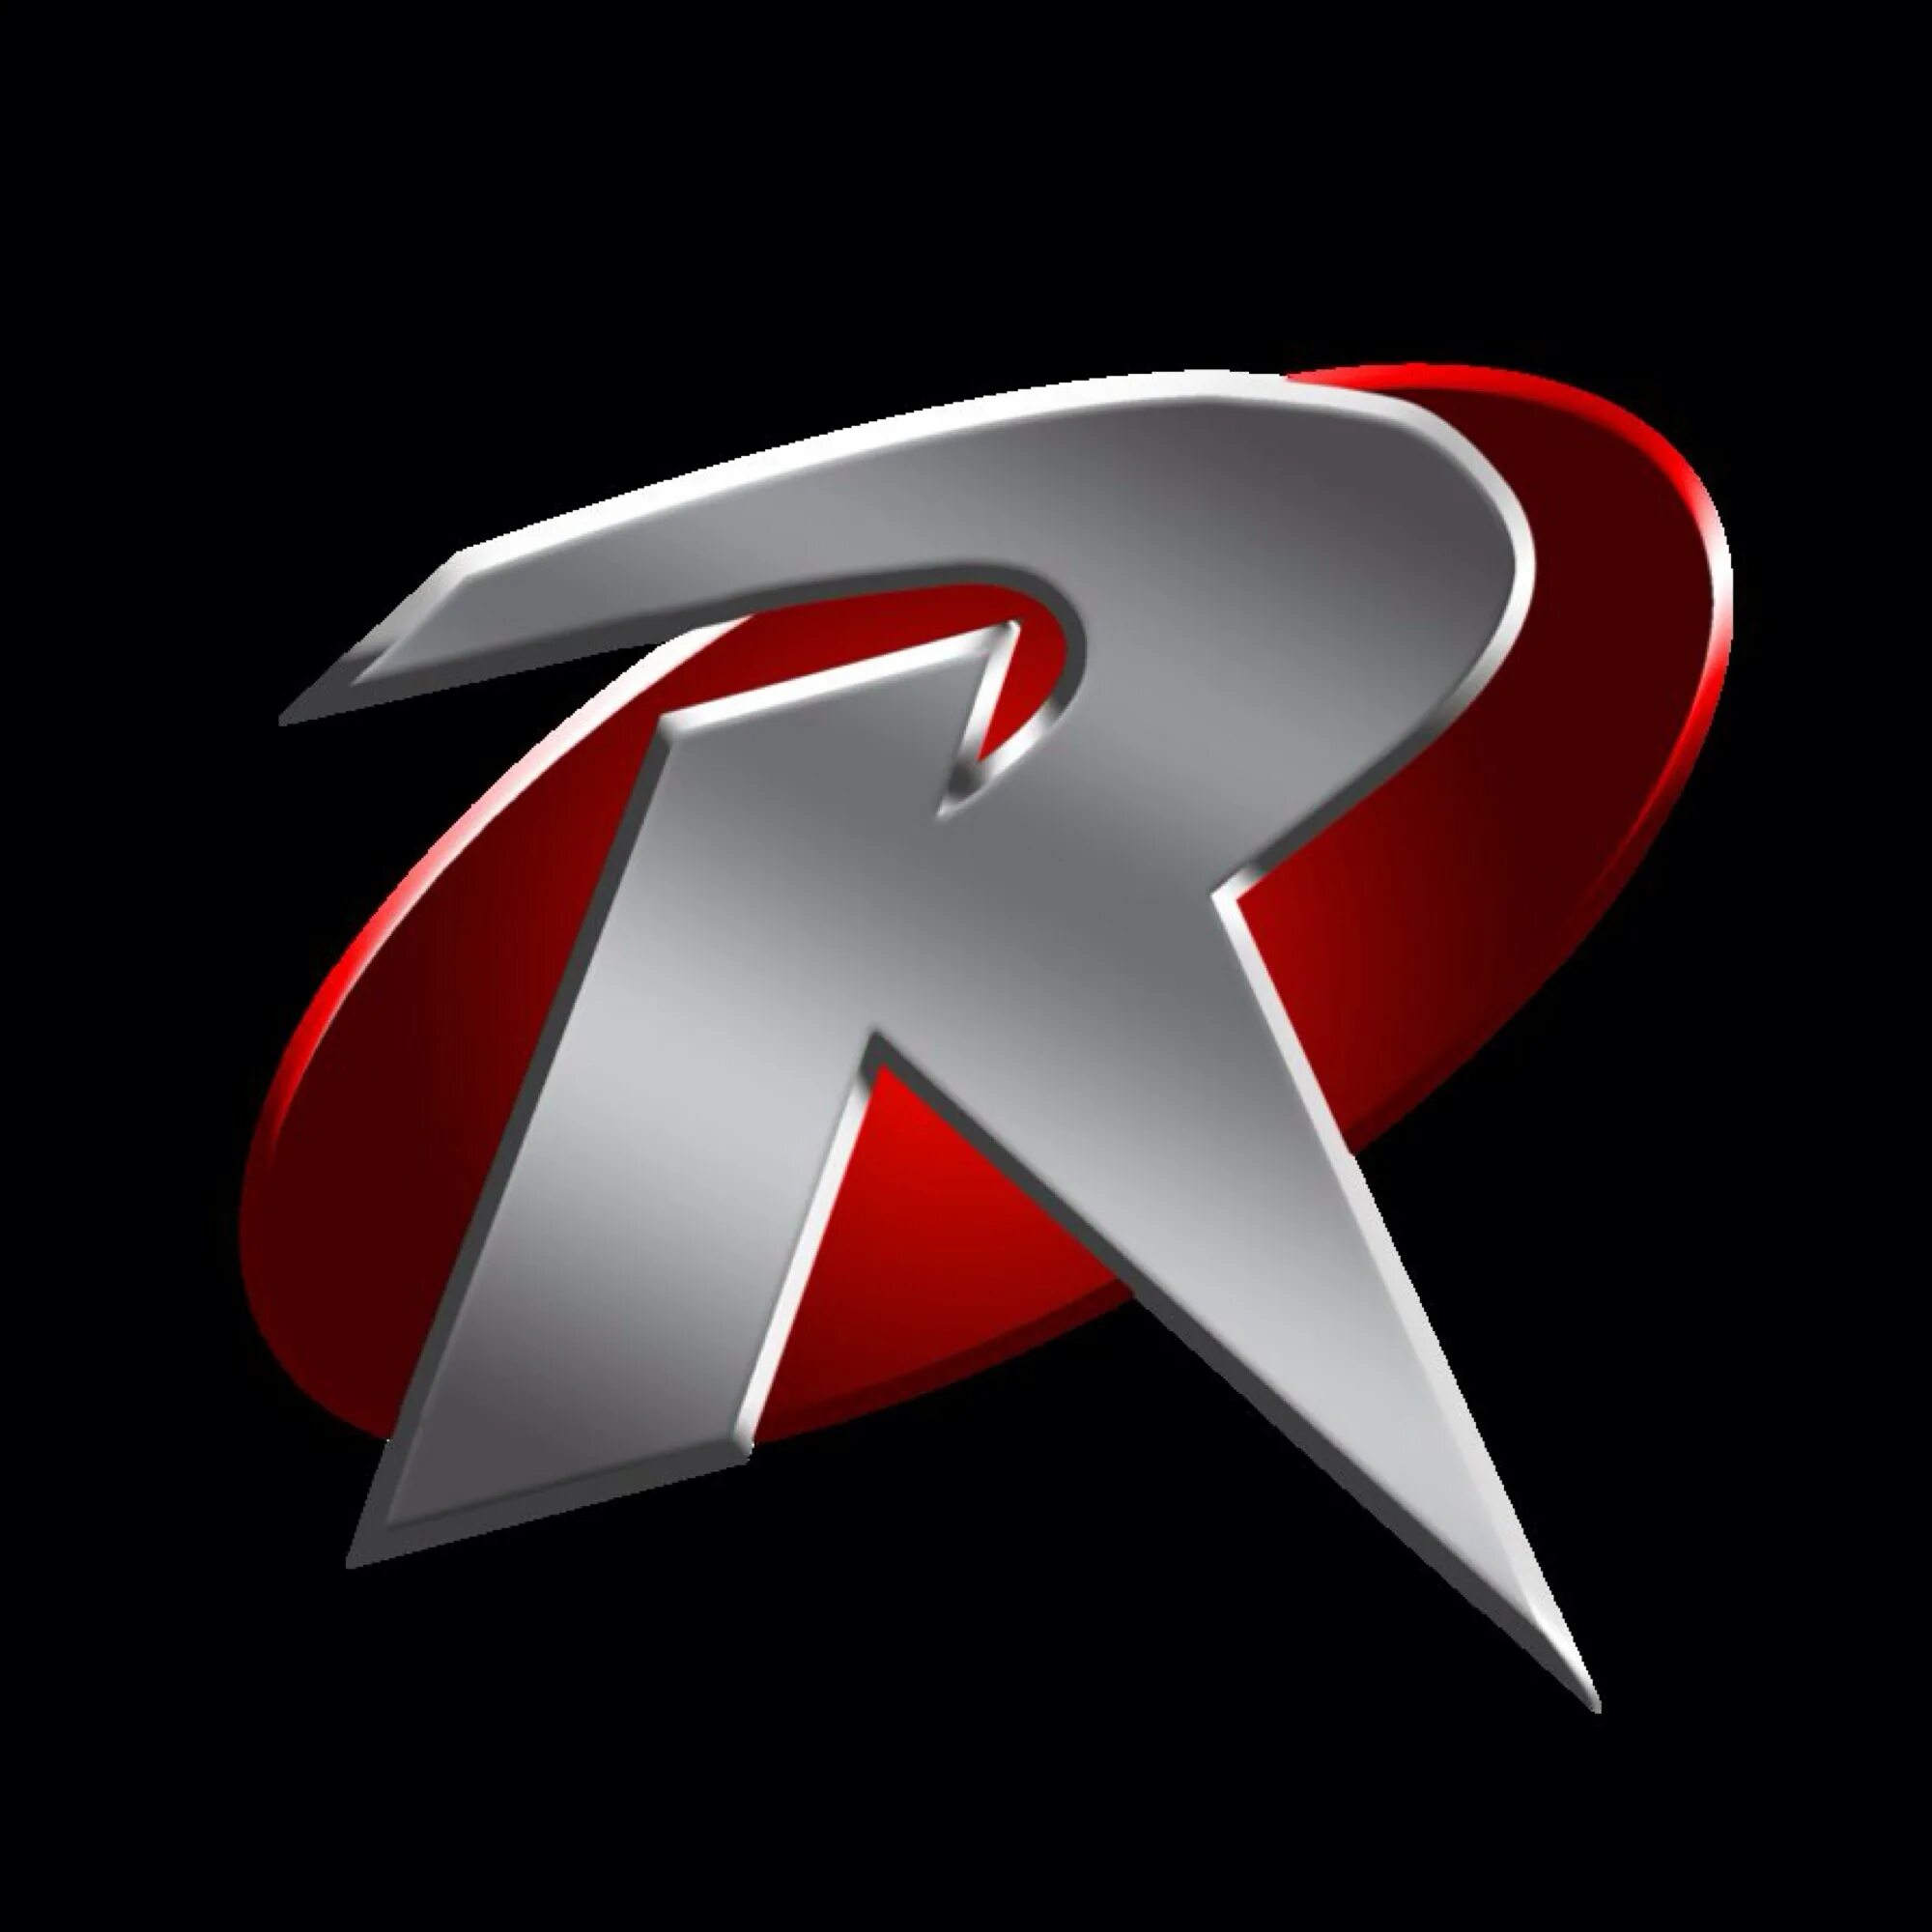 Icon r. Логотип r. Иконка буквы r. Красивая буква r для логотипа. Эмблема с буквой r.